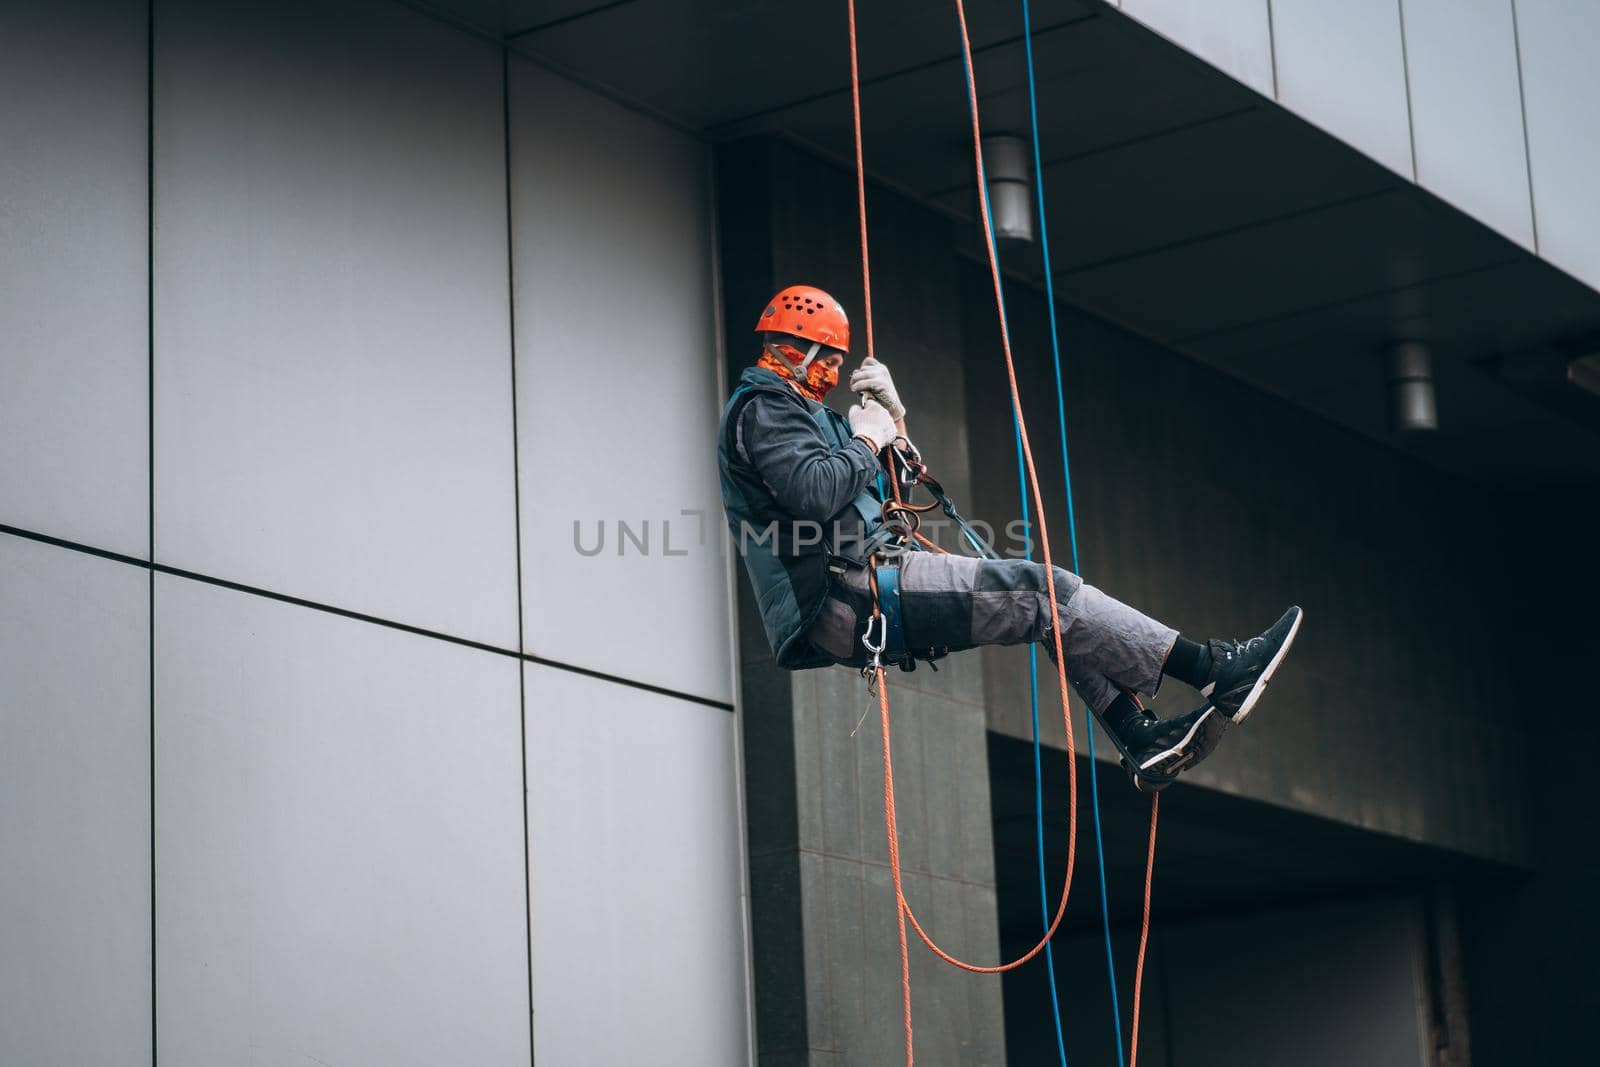 Industrial climber in uniform and helmet rises. Outdoor